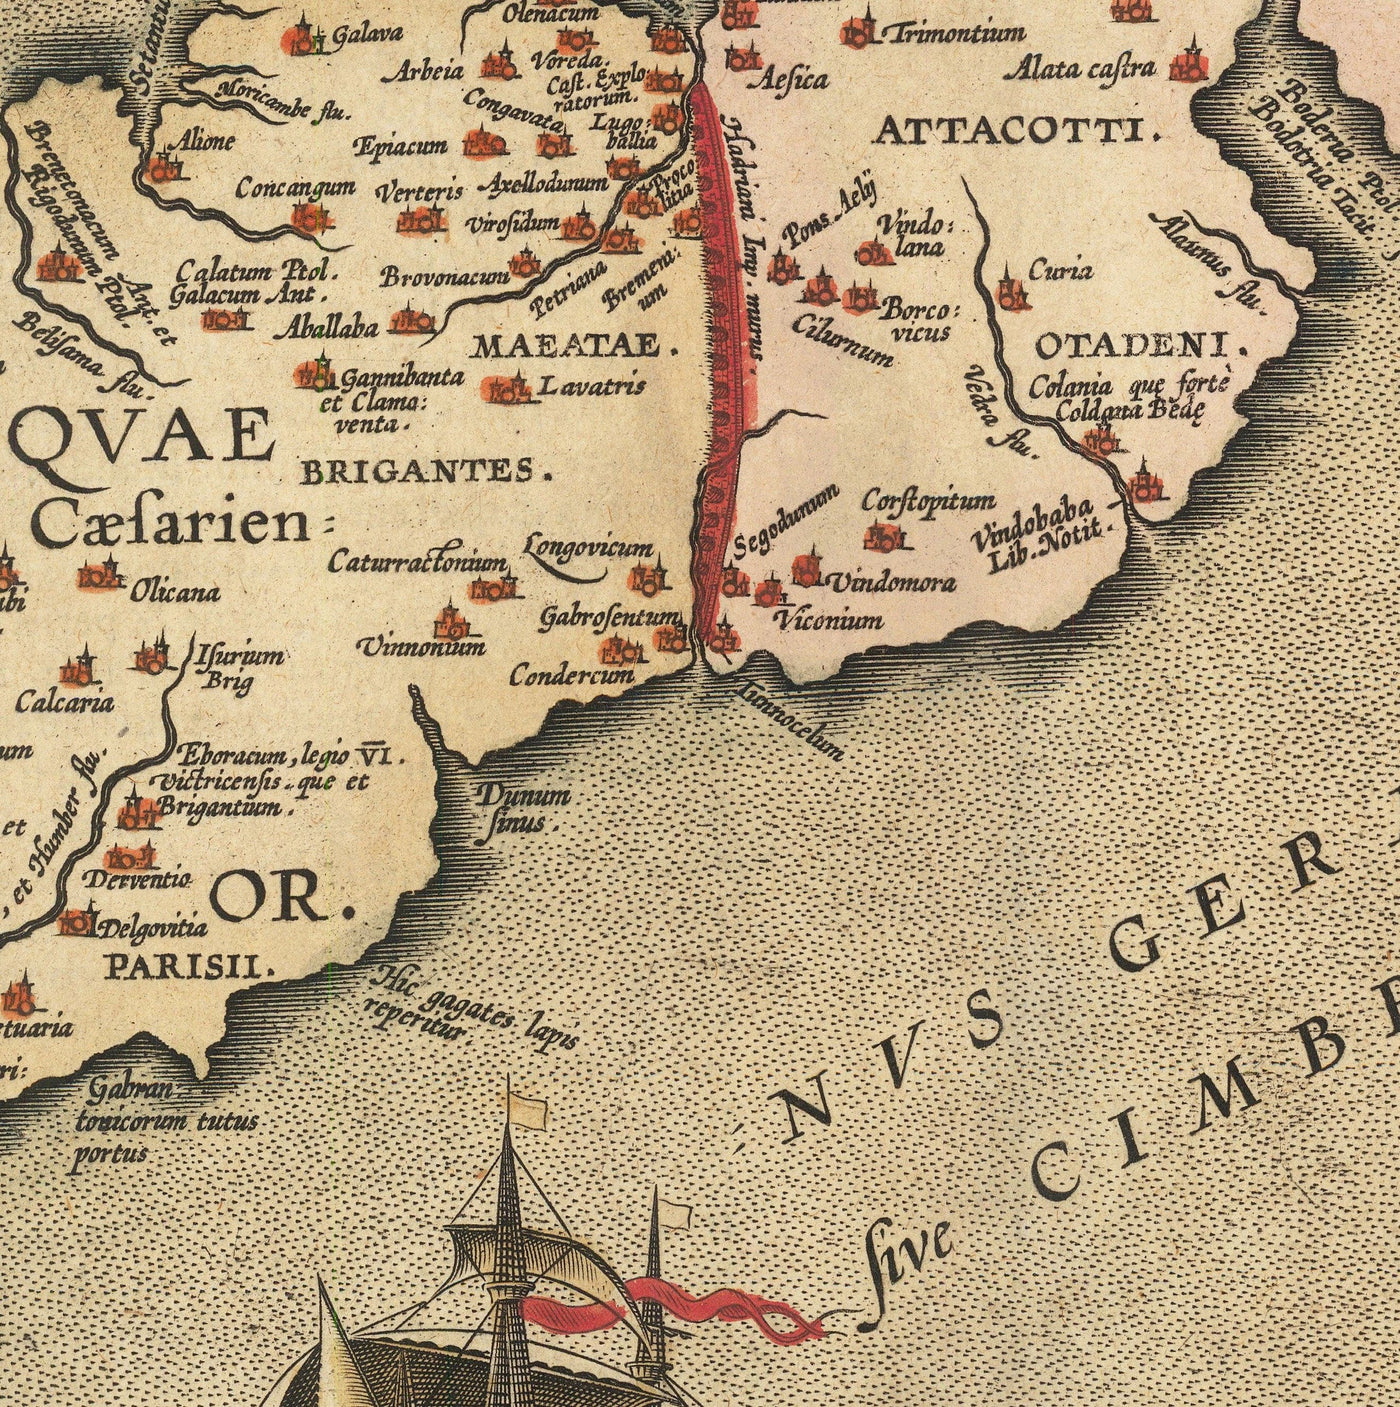 Viejo mapa de Islas Británicas por Abraham Ortelius, 1595 - Inglaterra, Irlanda, Gales, Escocia - Britannia, Hibernia